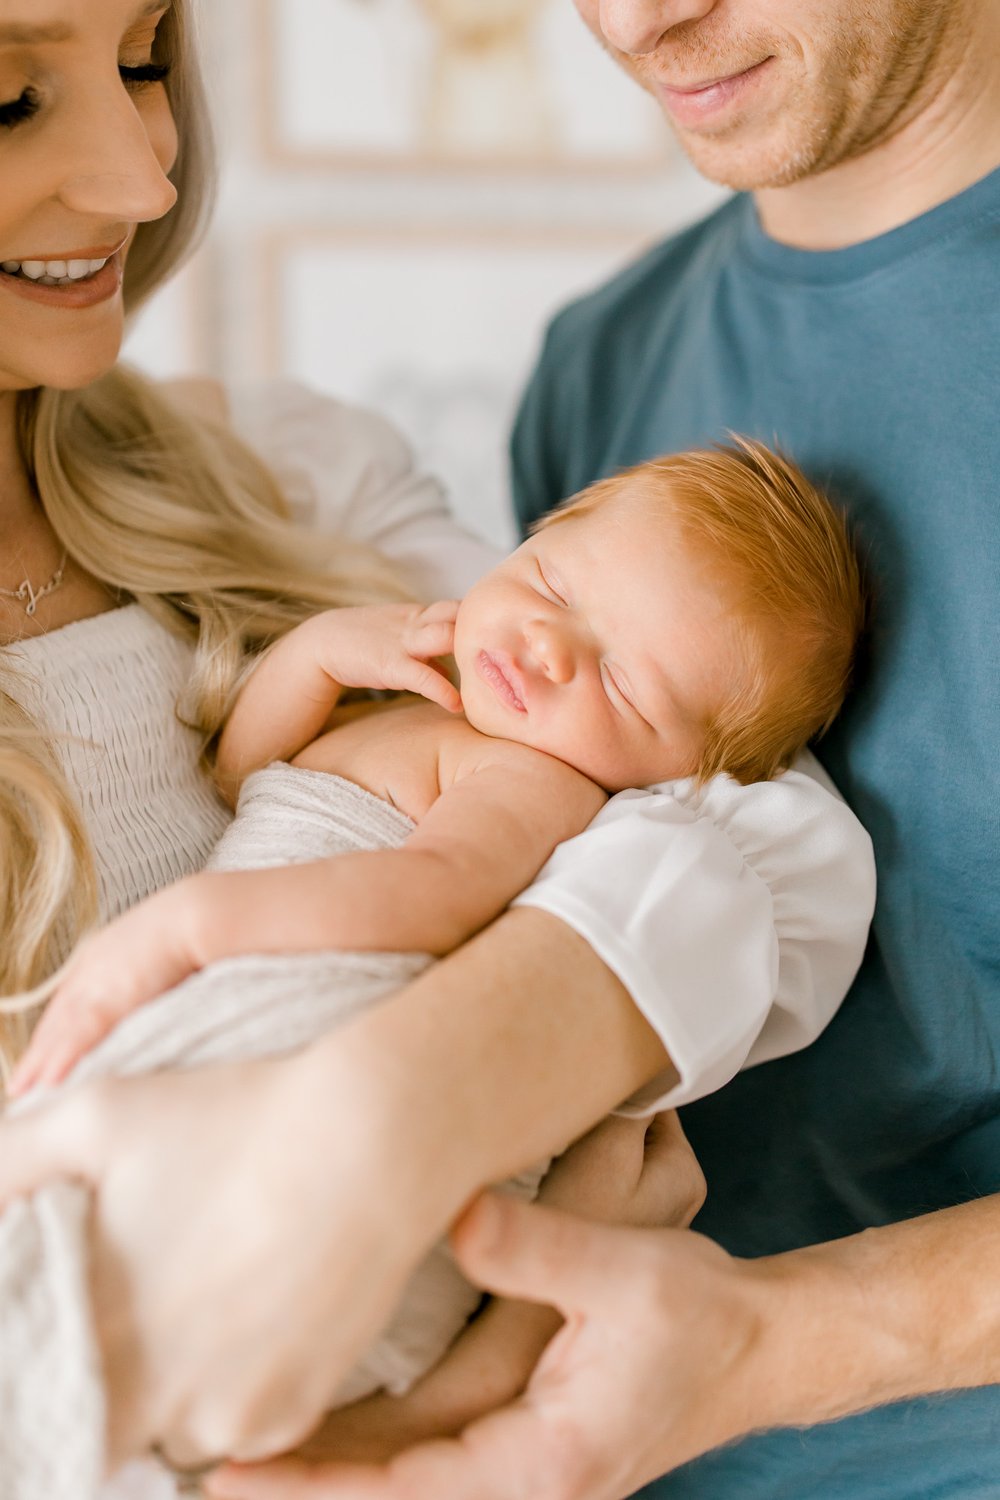 Neutral Baby Boys Nursery Room | Michigan Newborn Lifestyle Photography